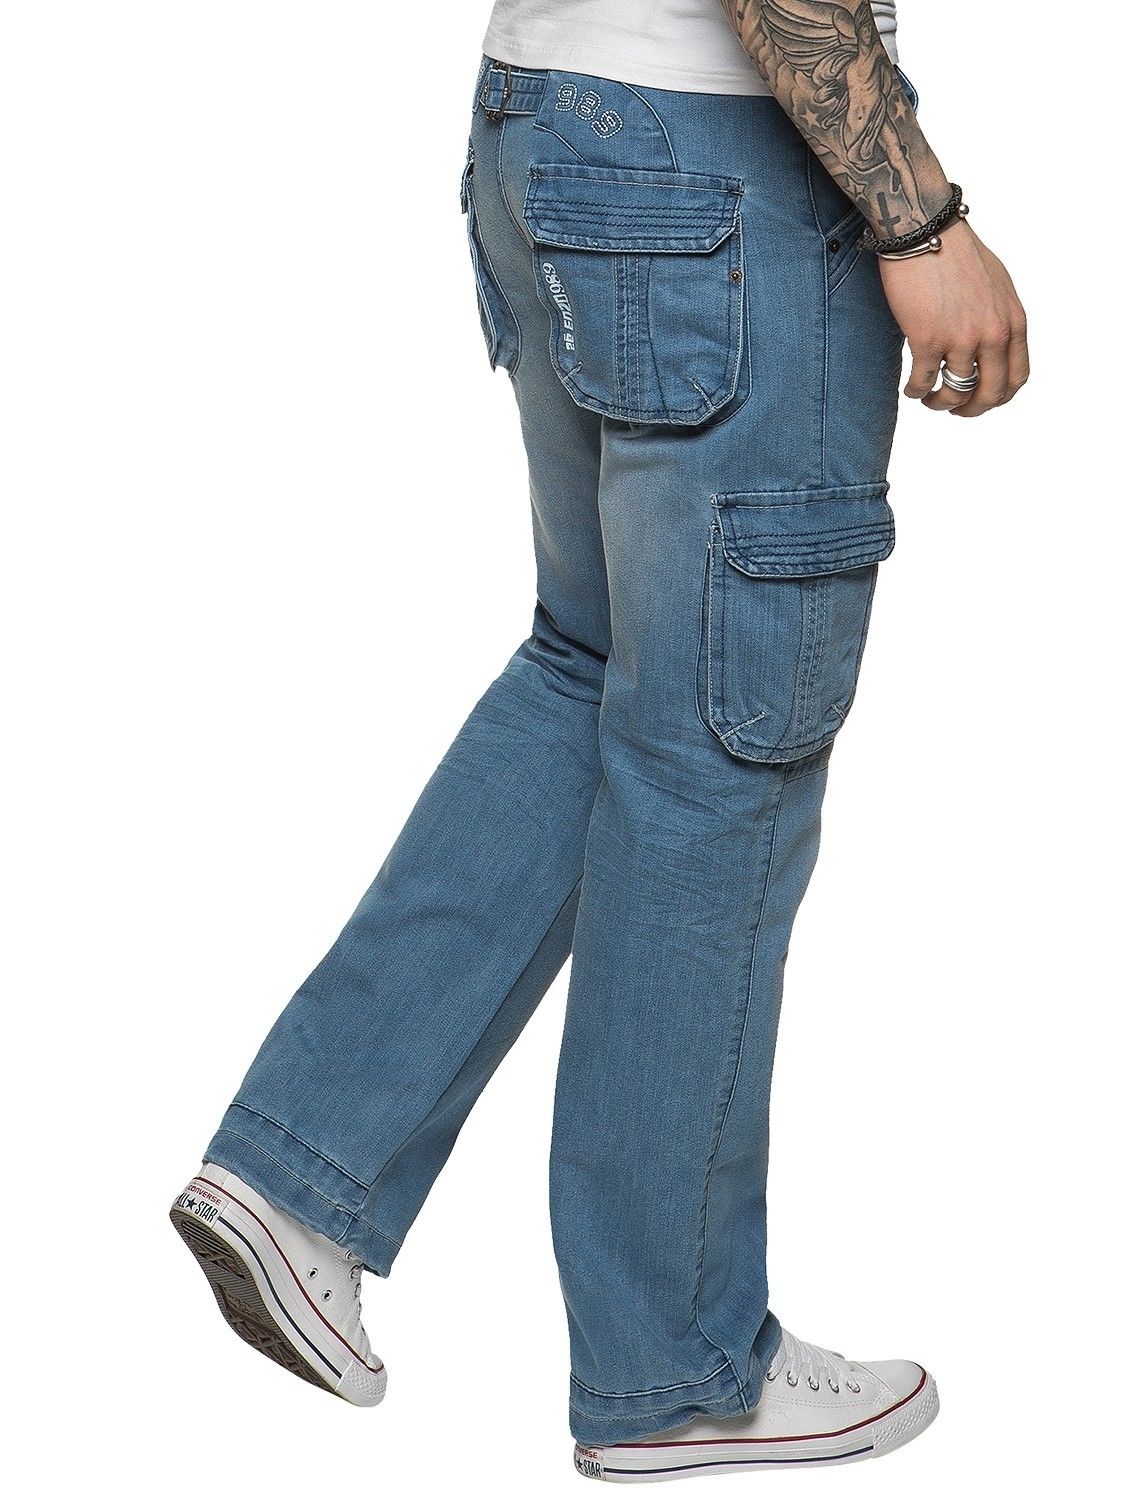 New Enzo Mens Designer Cargo Combat Work Jeans Blue Denim Pants All ...